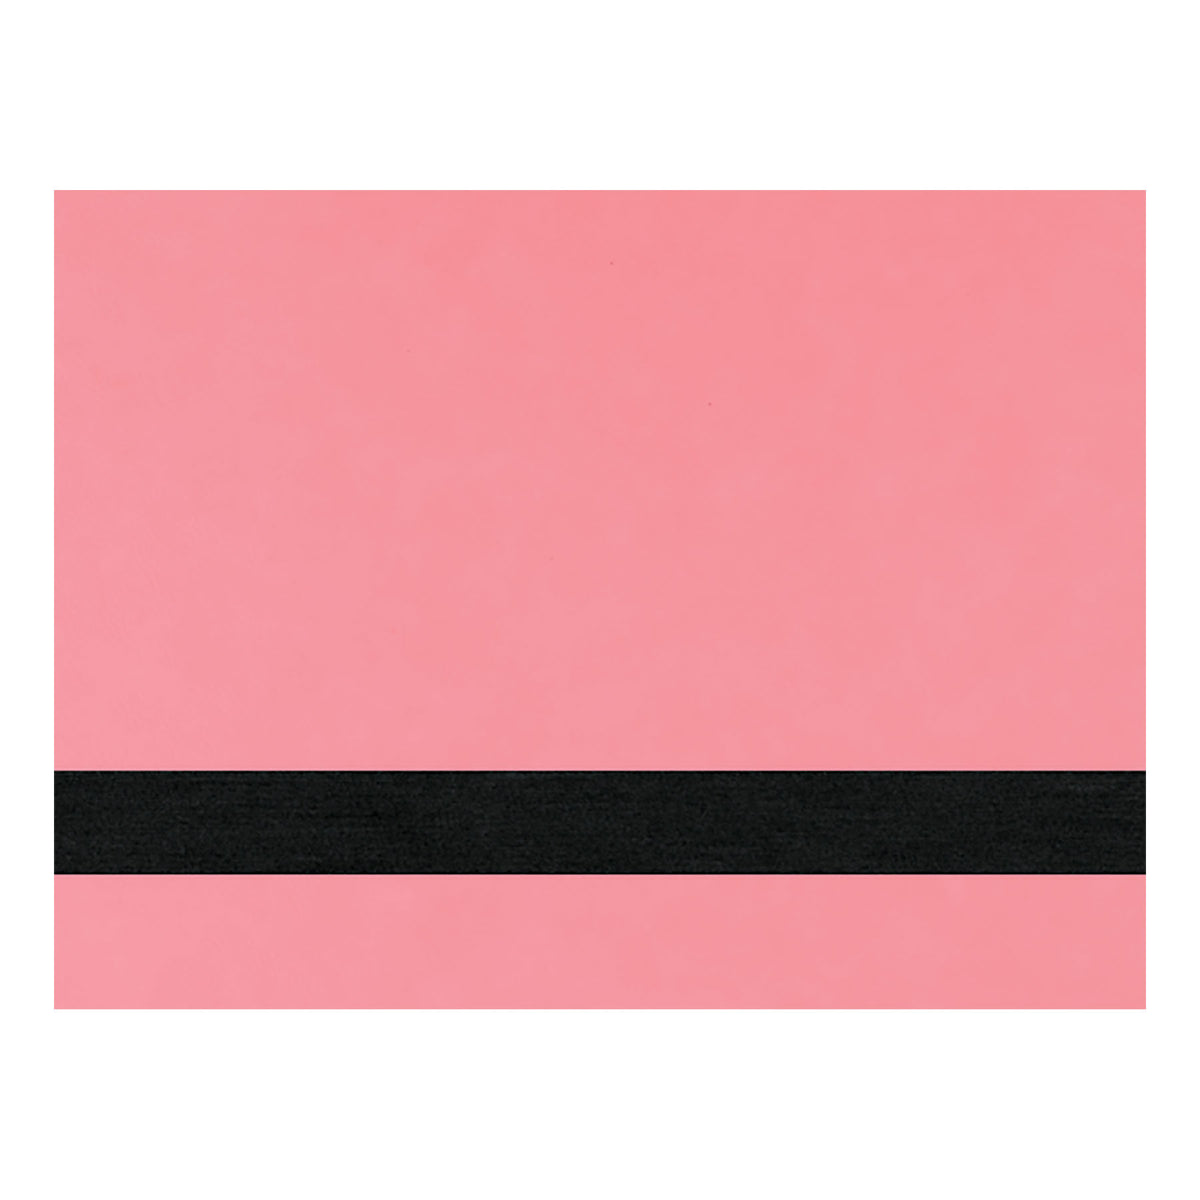 Leatherette Sheets 12 x 24 - Pink/Black